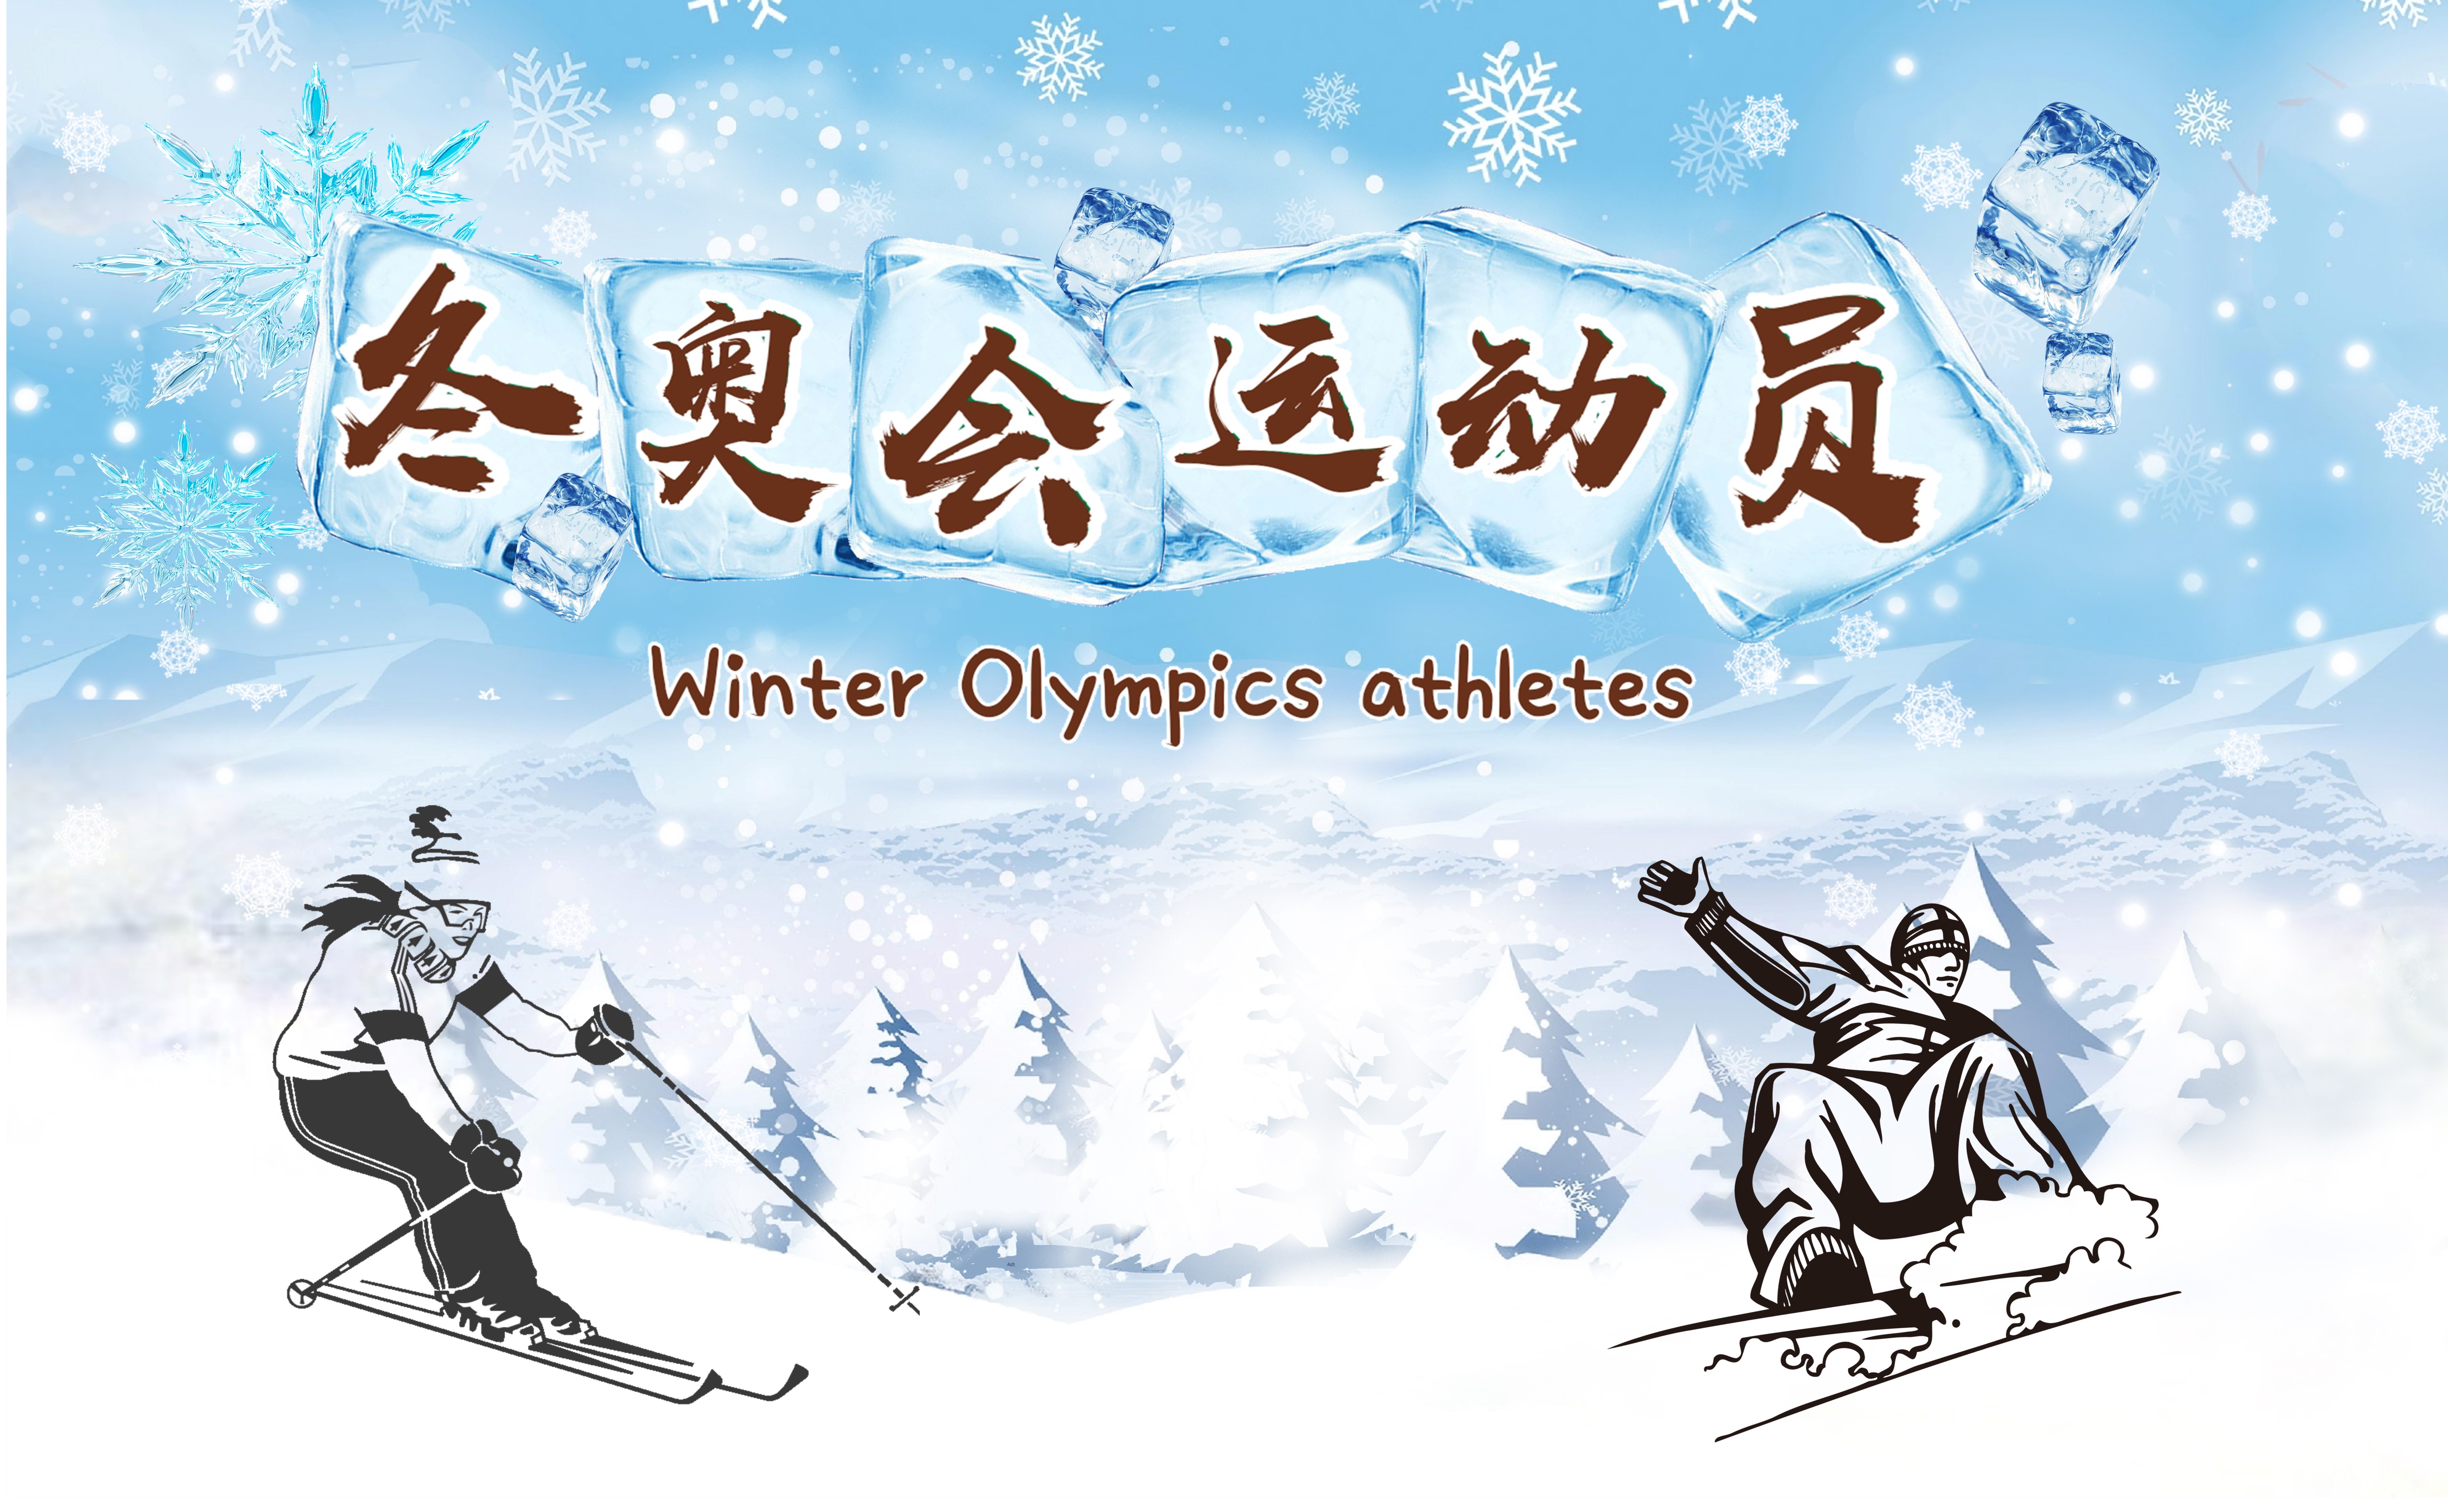 Winter Olympics athletes